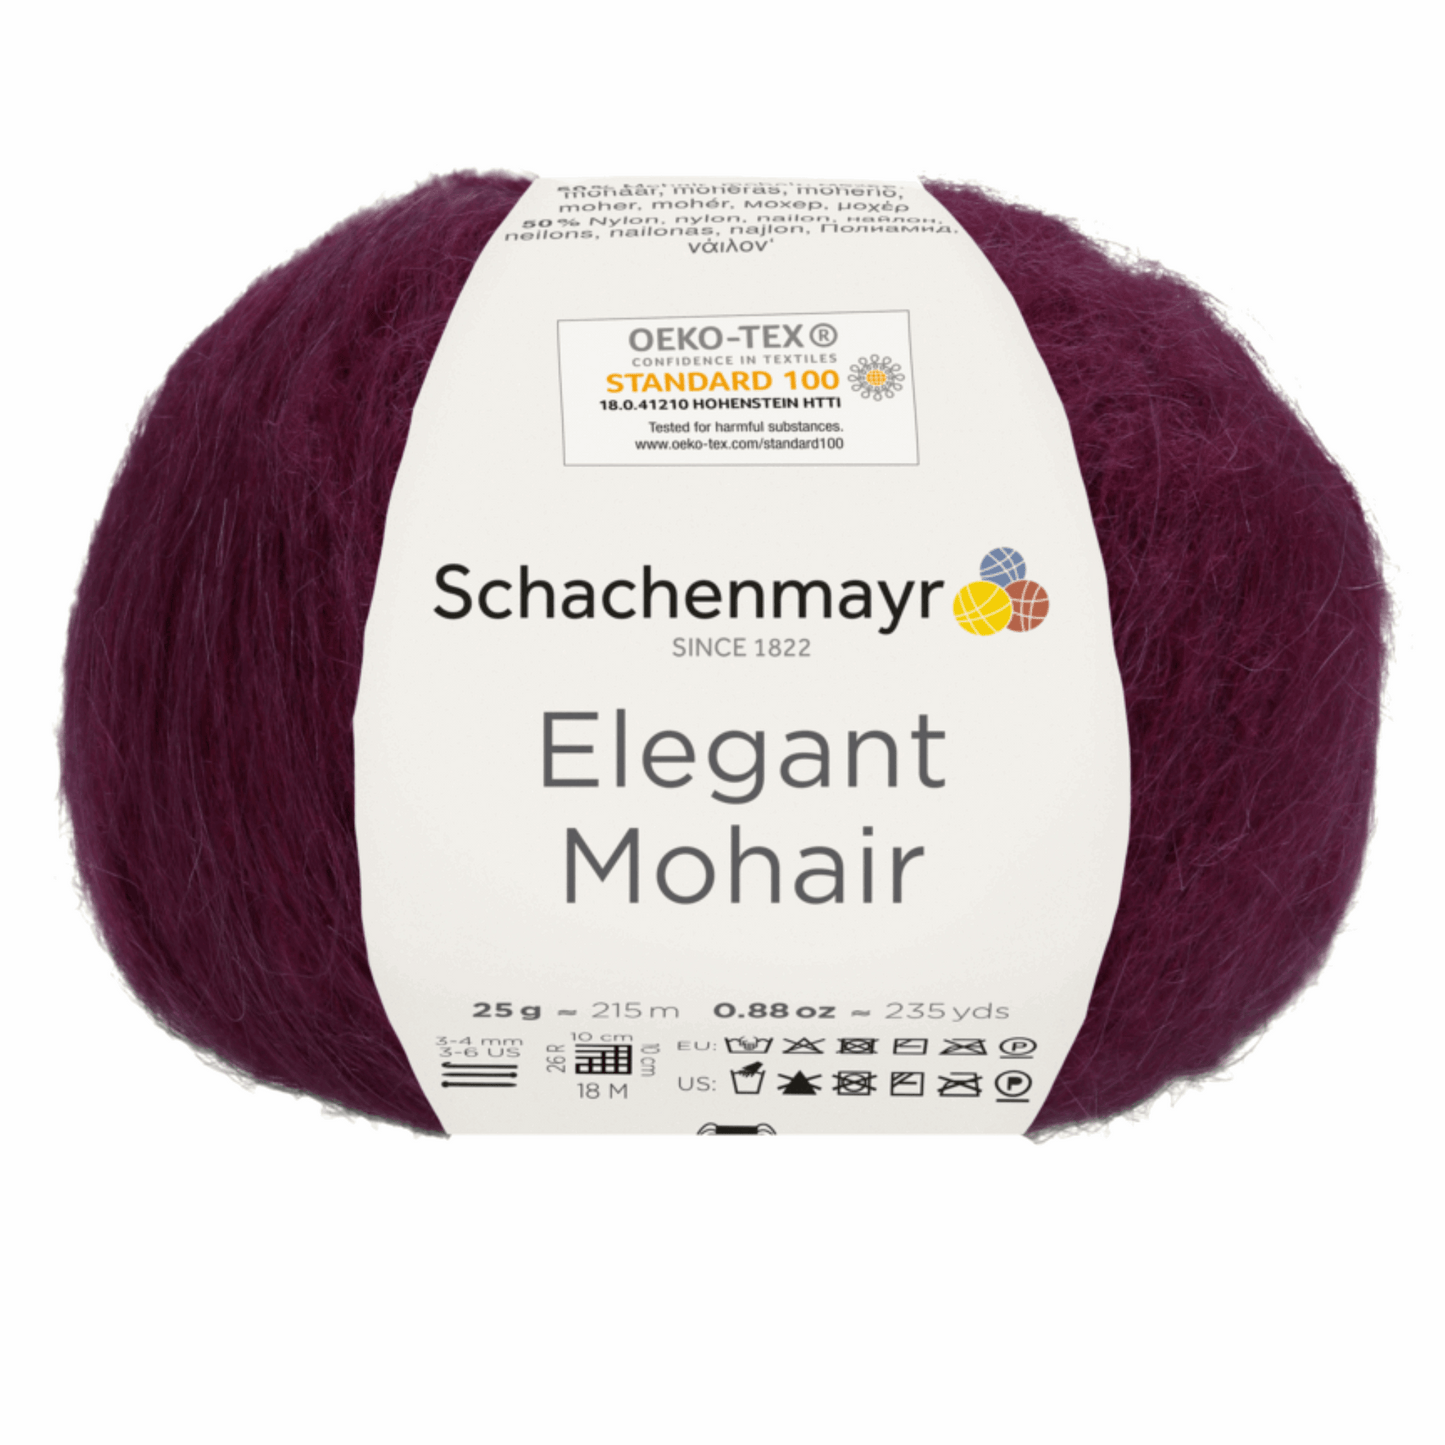 Schachenmayr Elegant Mohair 25g, 97003, Farbe brombeer 38